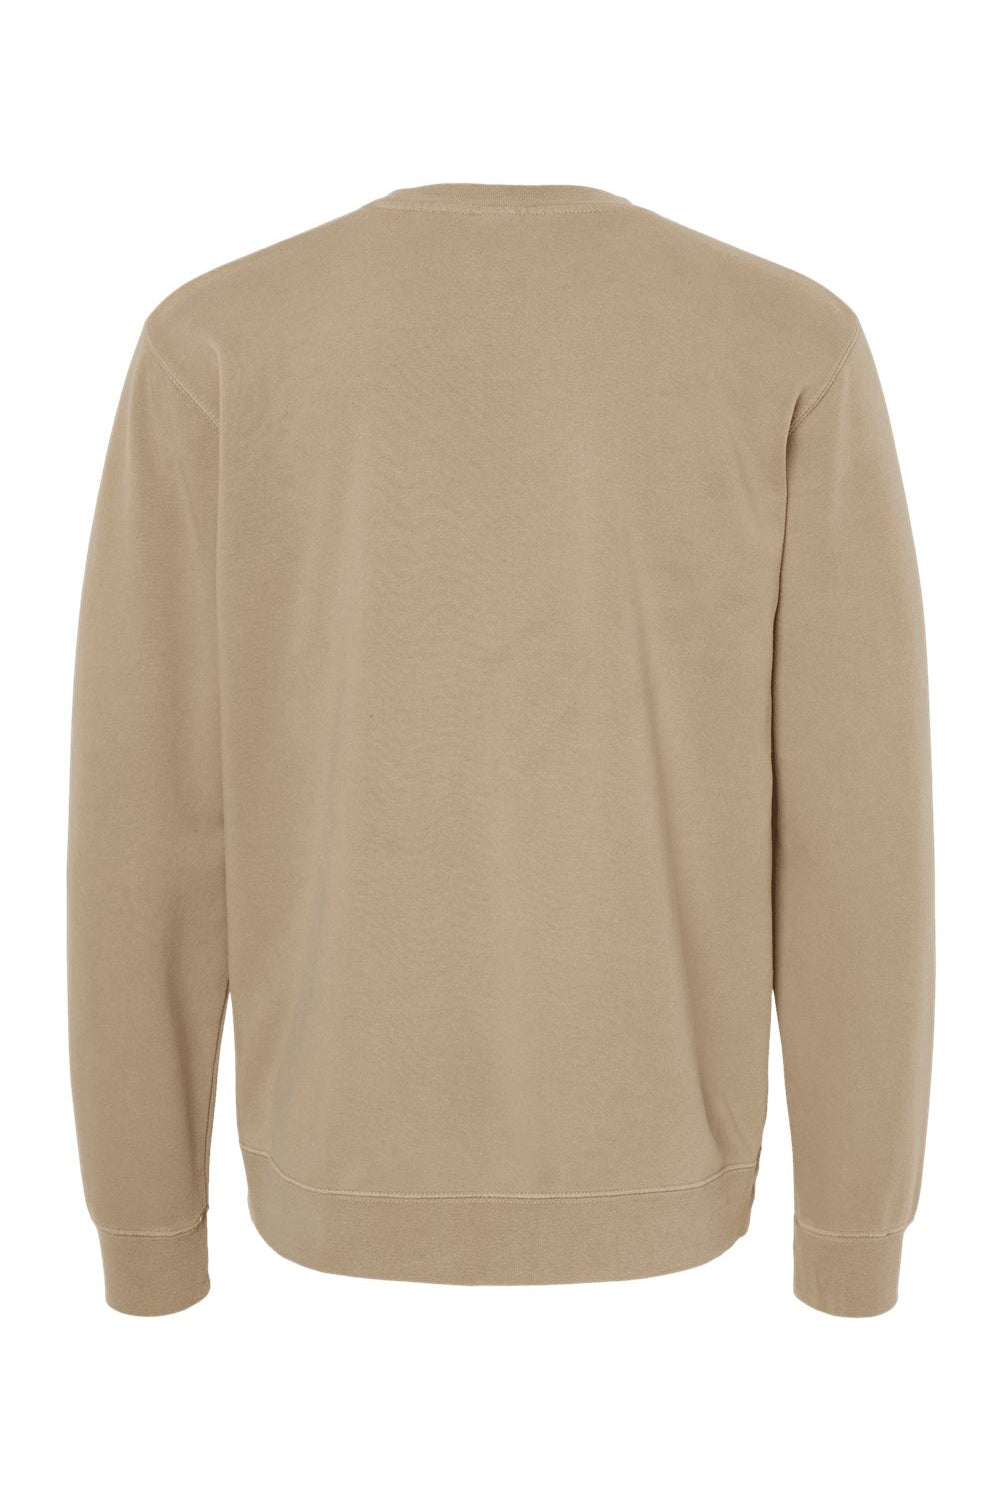 Independent Trading Co. PRM3500 Mens Pigment Dyed Crewneck Sweatshirt Sandstone Brown Flat Back